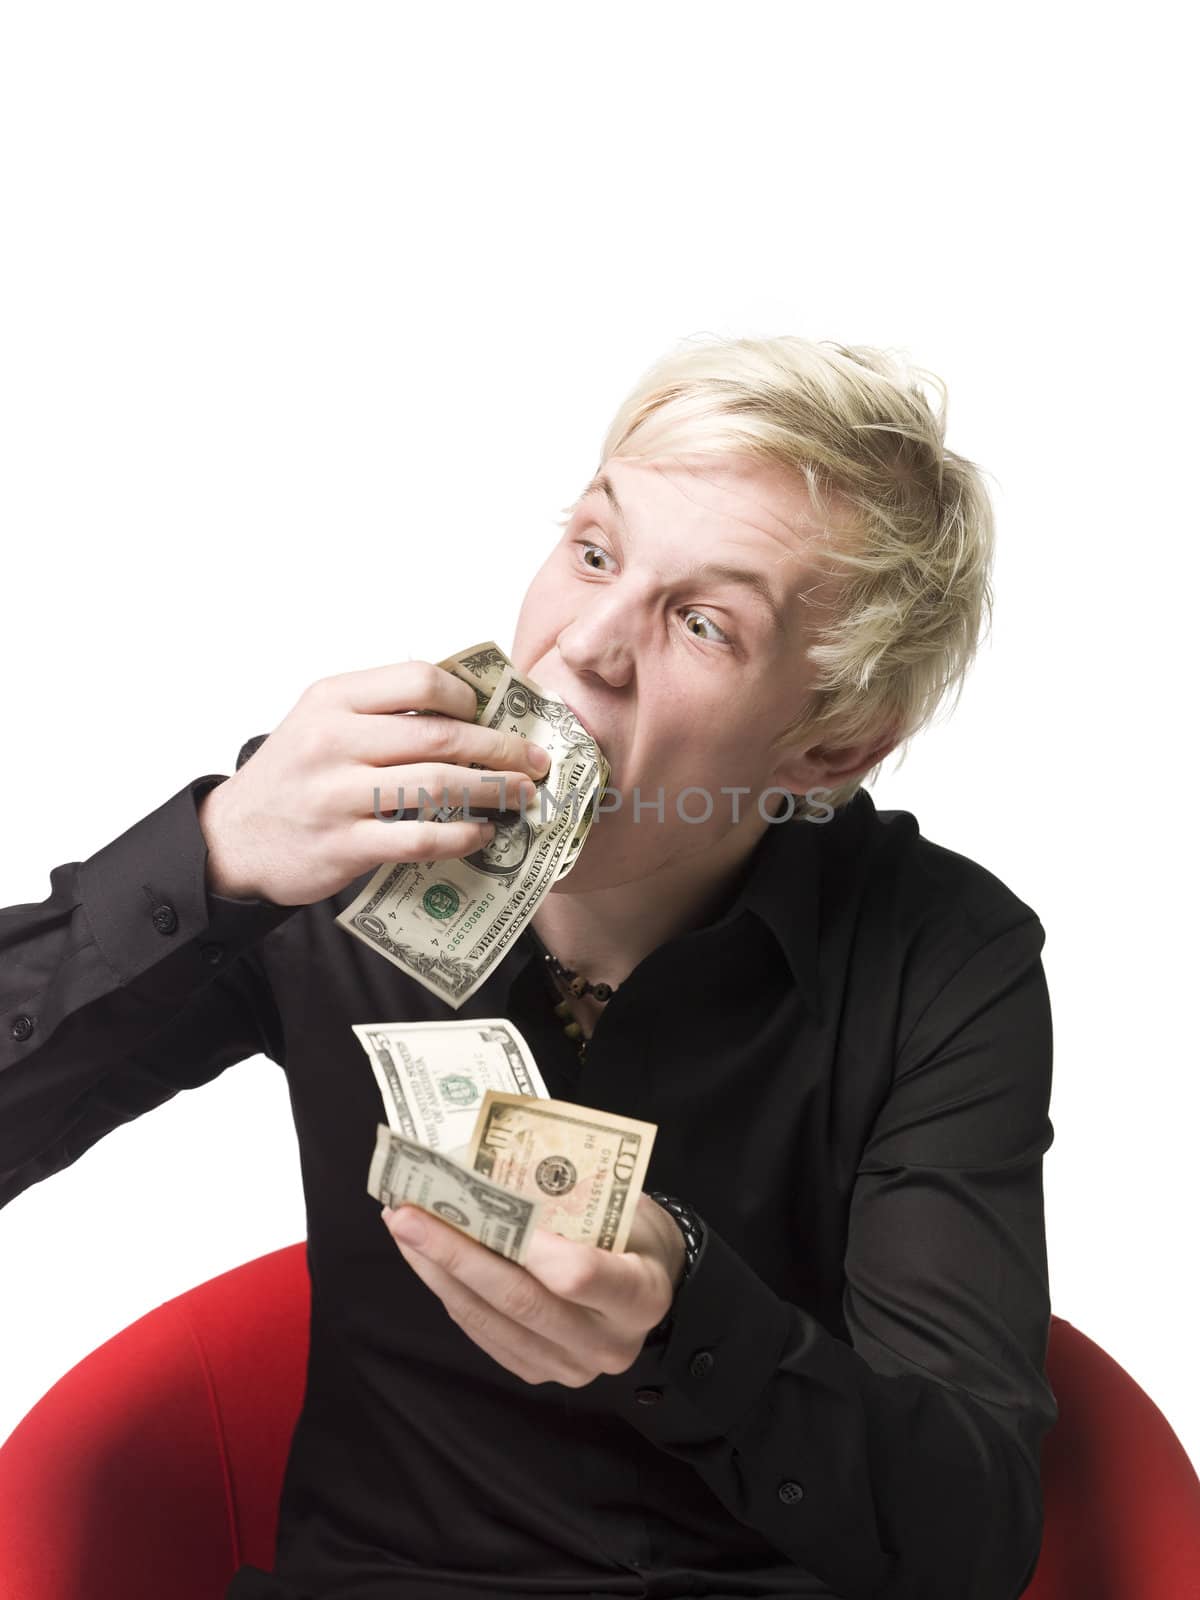 Boy eating money by gemenacom